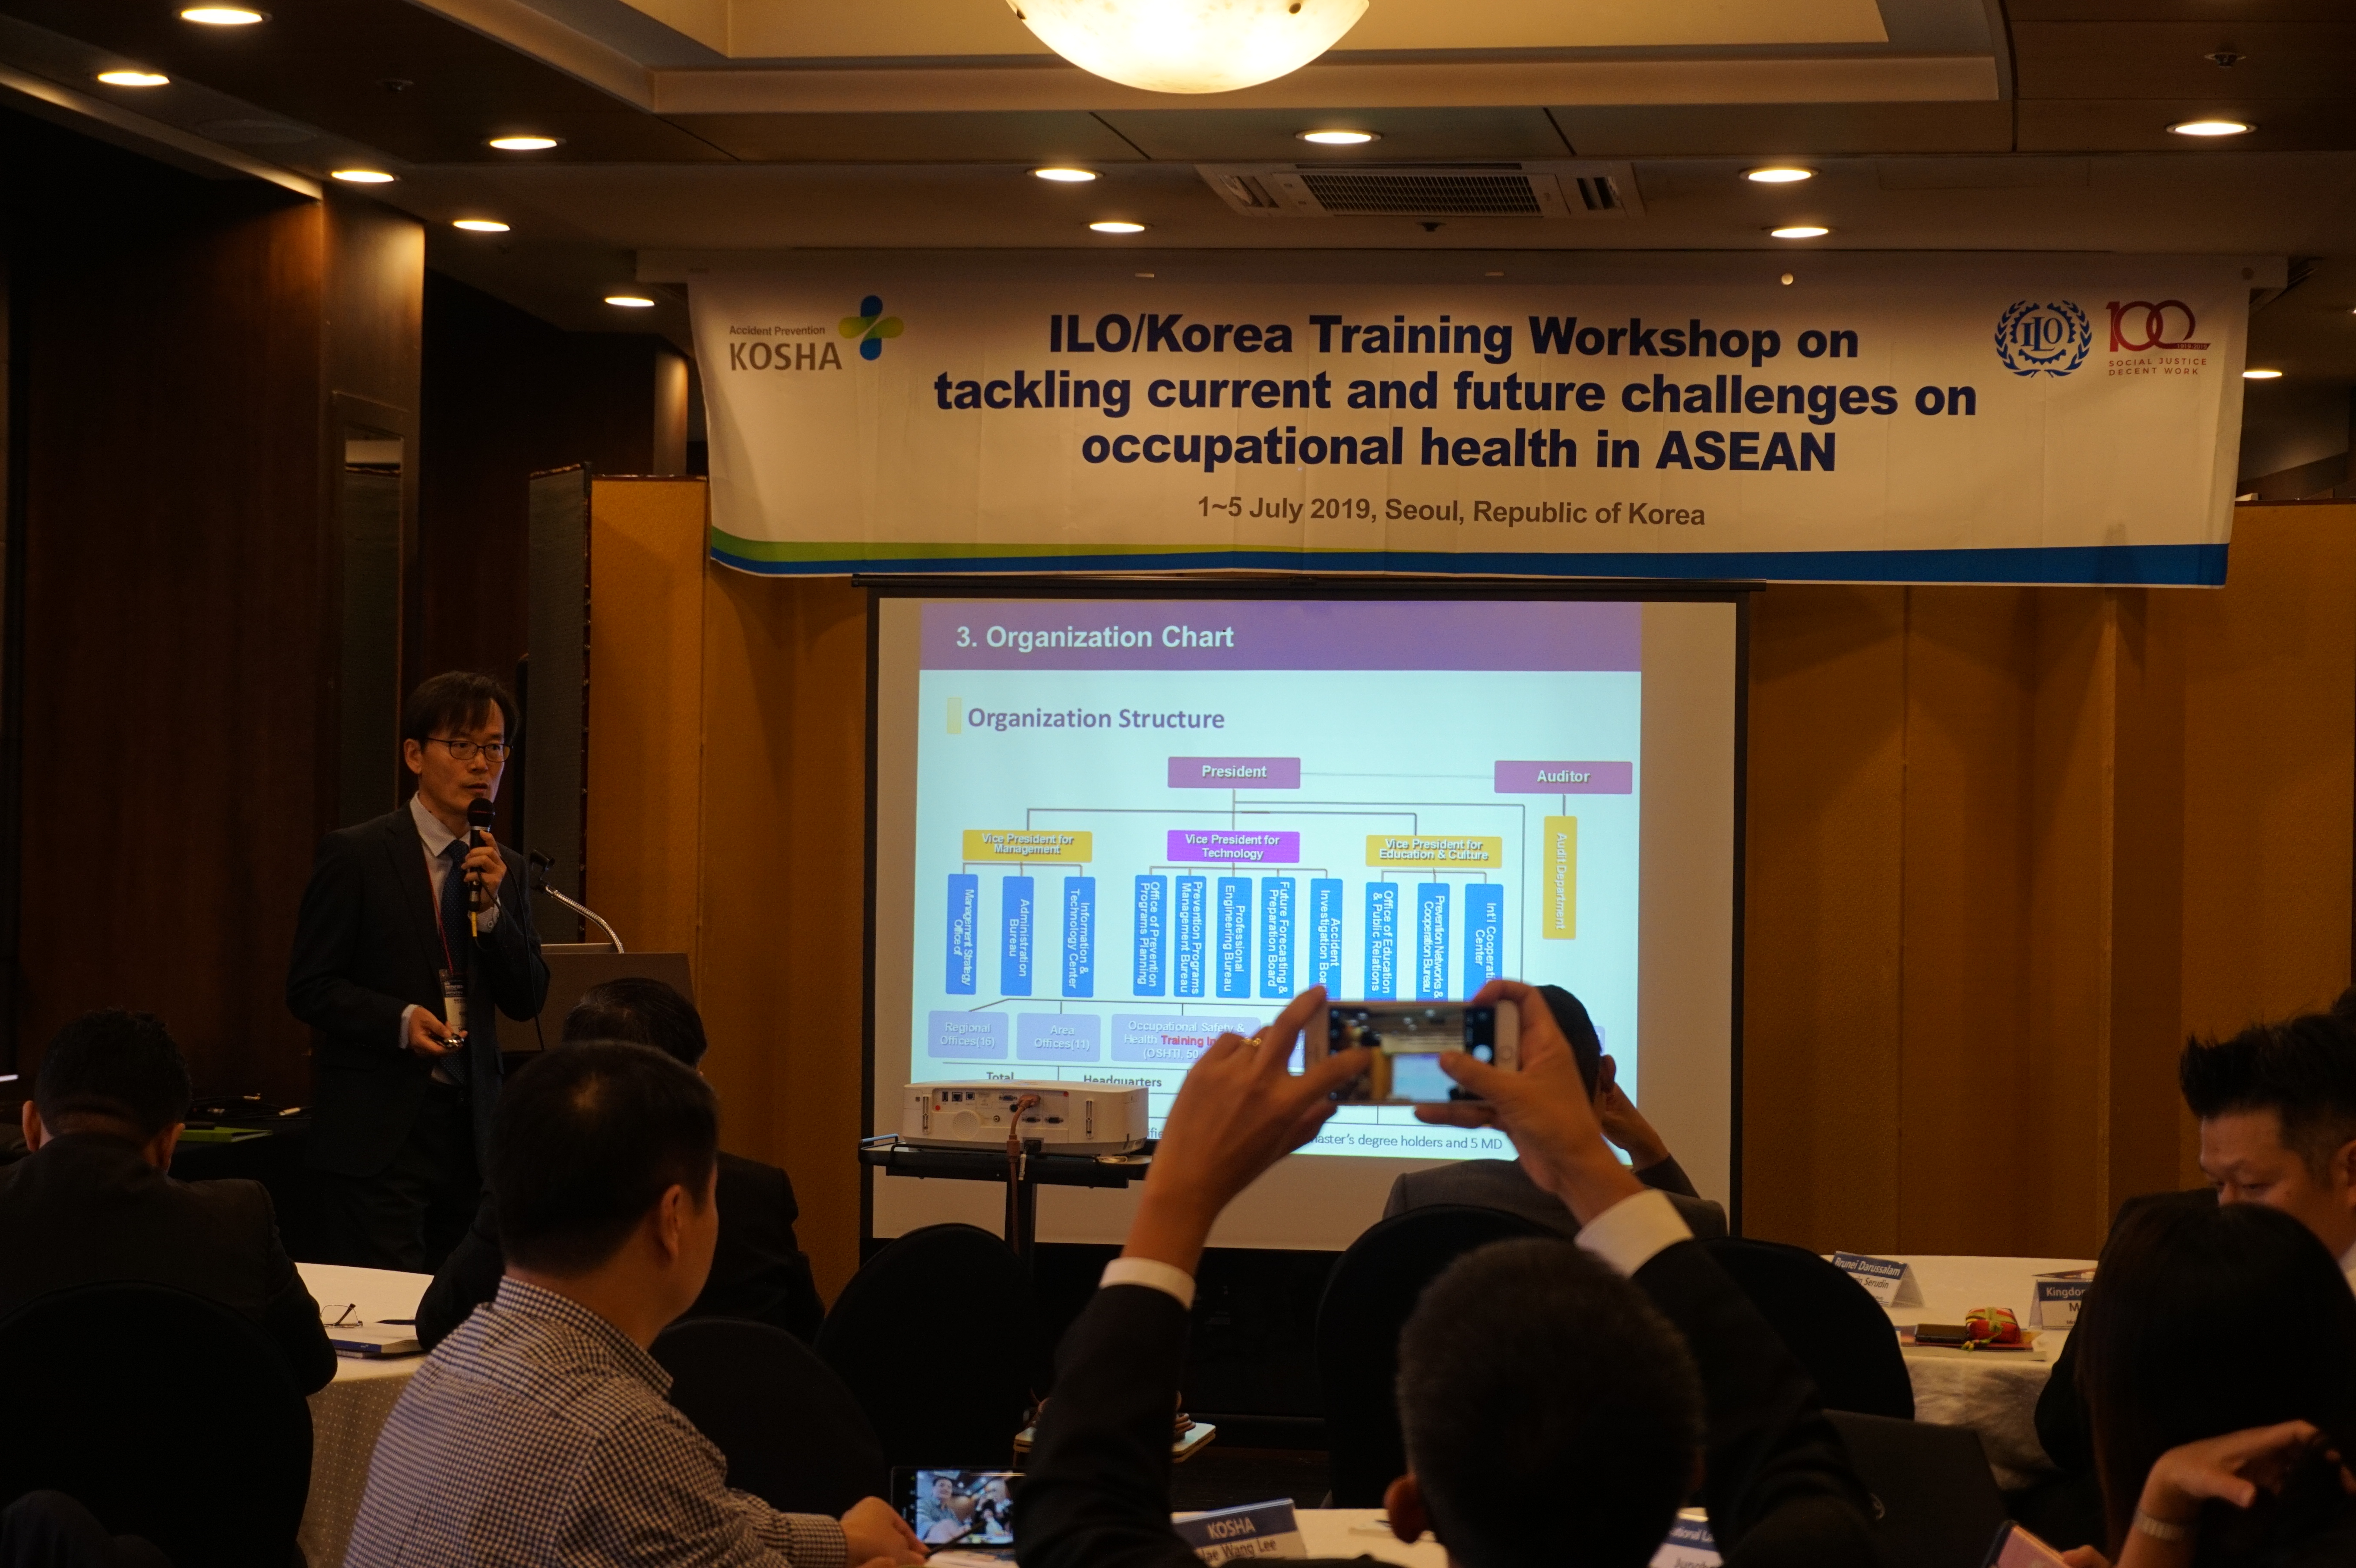 ILO/Korea Training Workshop